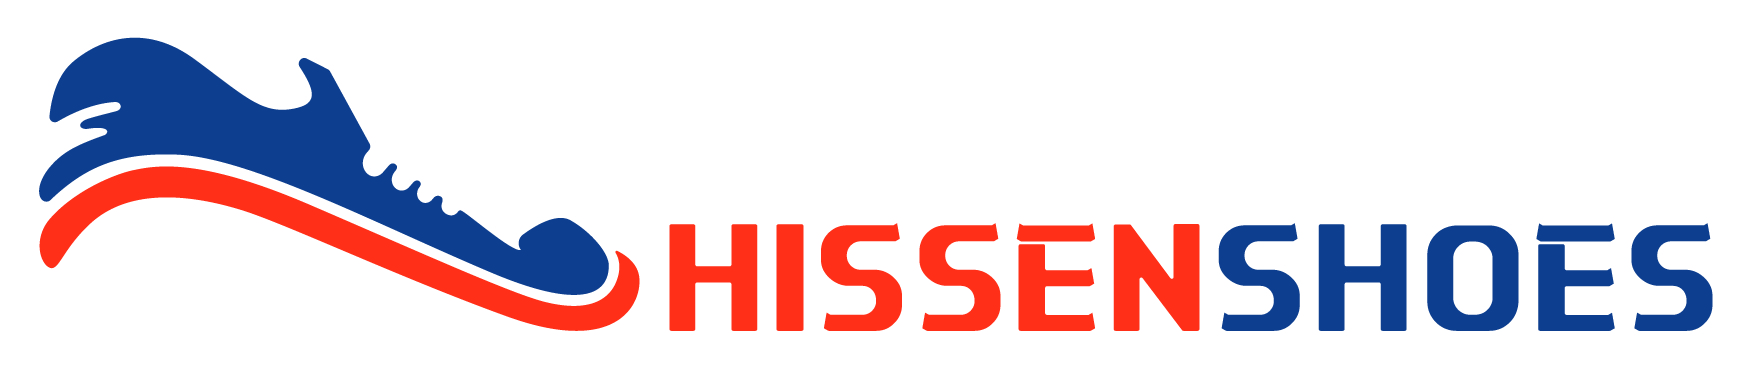 hissen shoes logo 2